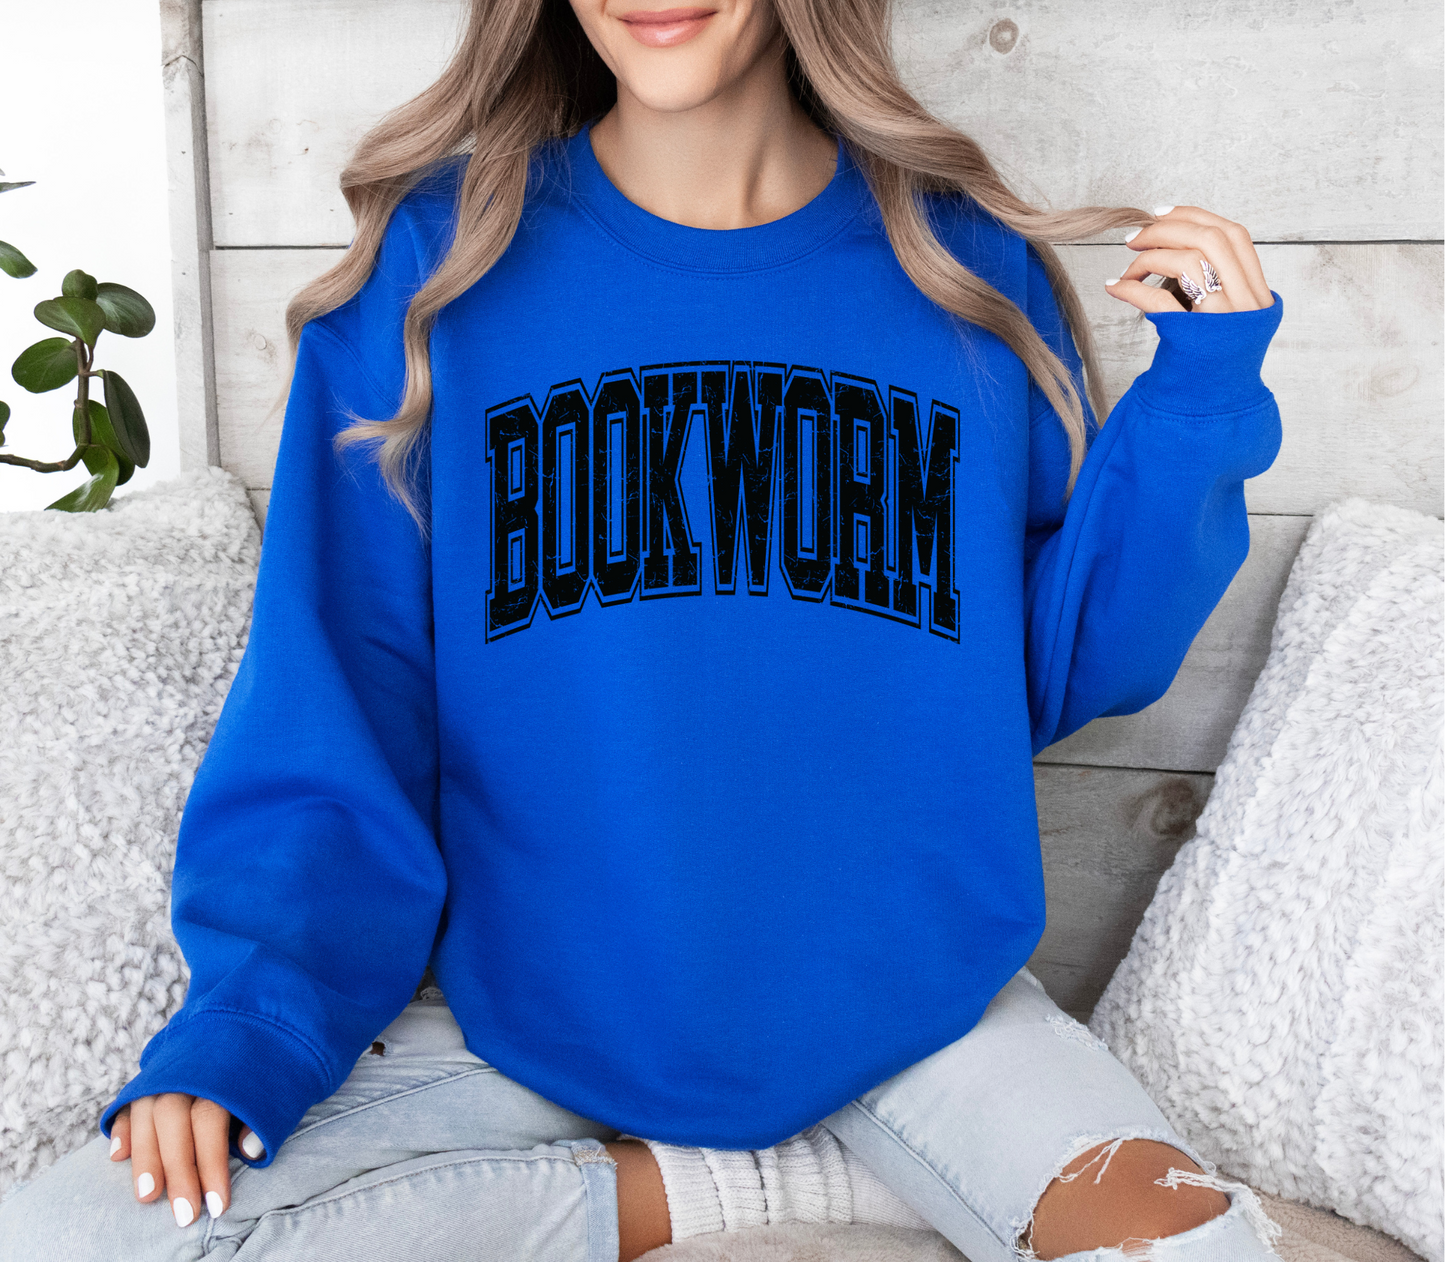 Bookworm Crewneck